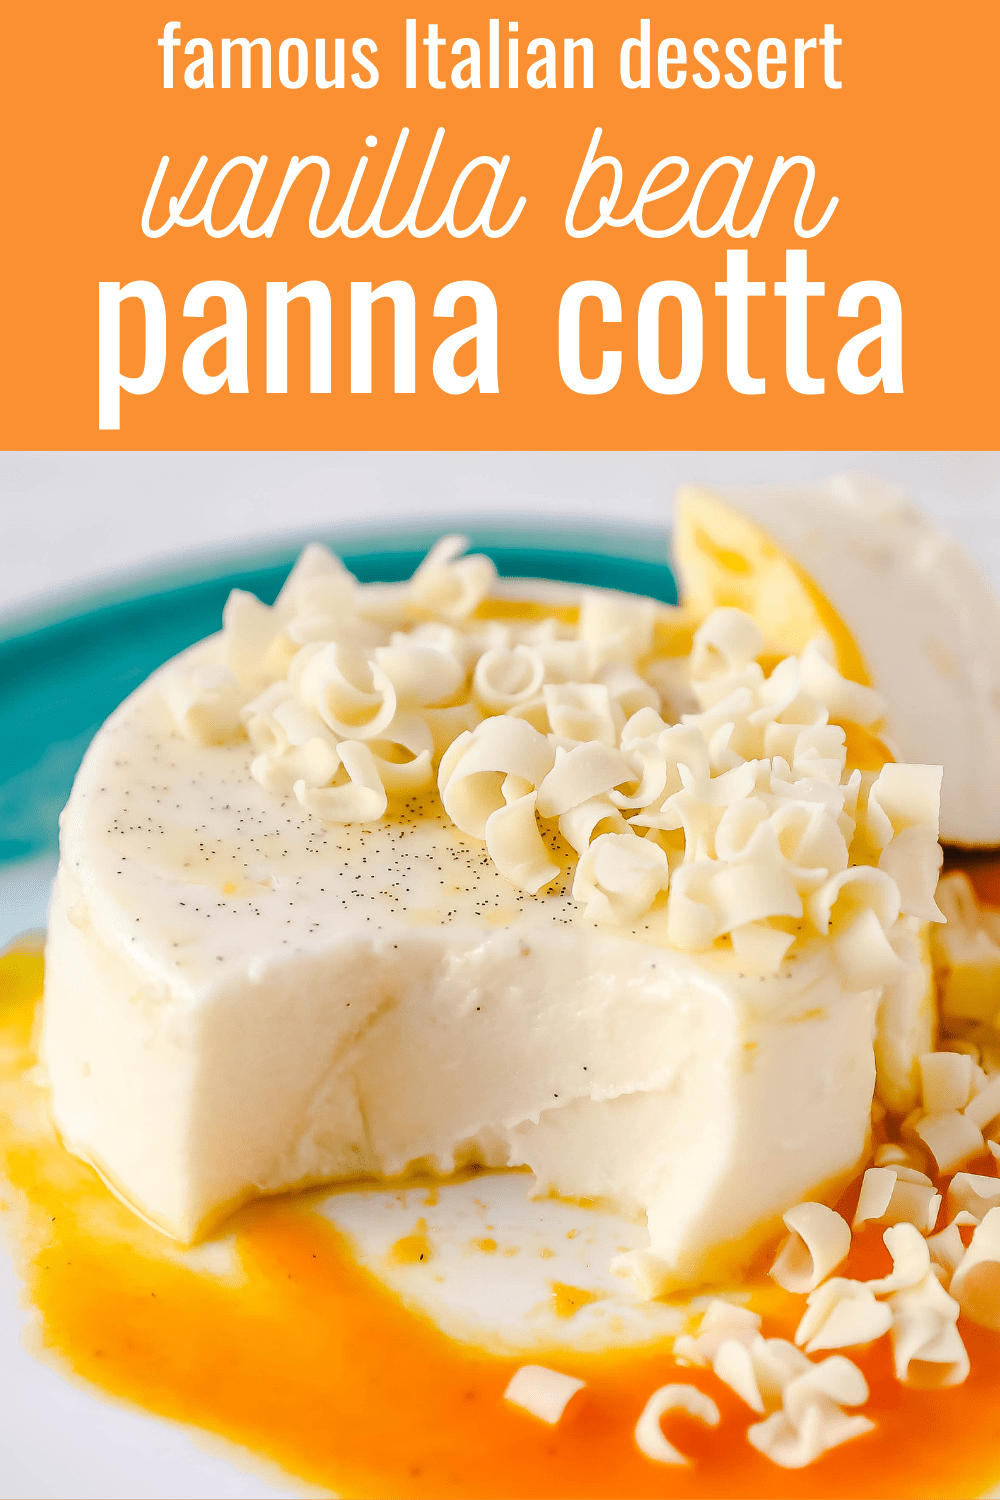 Panna Cotta. A silky smooth, creamy vanilla bean dessert made with cream, sugar, gelatin, and vanilla beans. An Italian favorite dessert! www.modernhoney.com #pannacotta #dessert #pannacottadessert